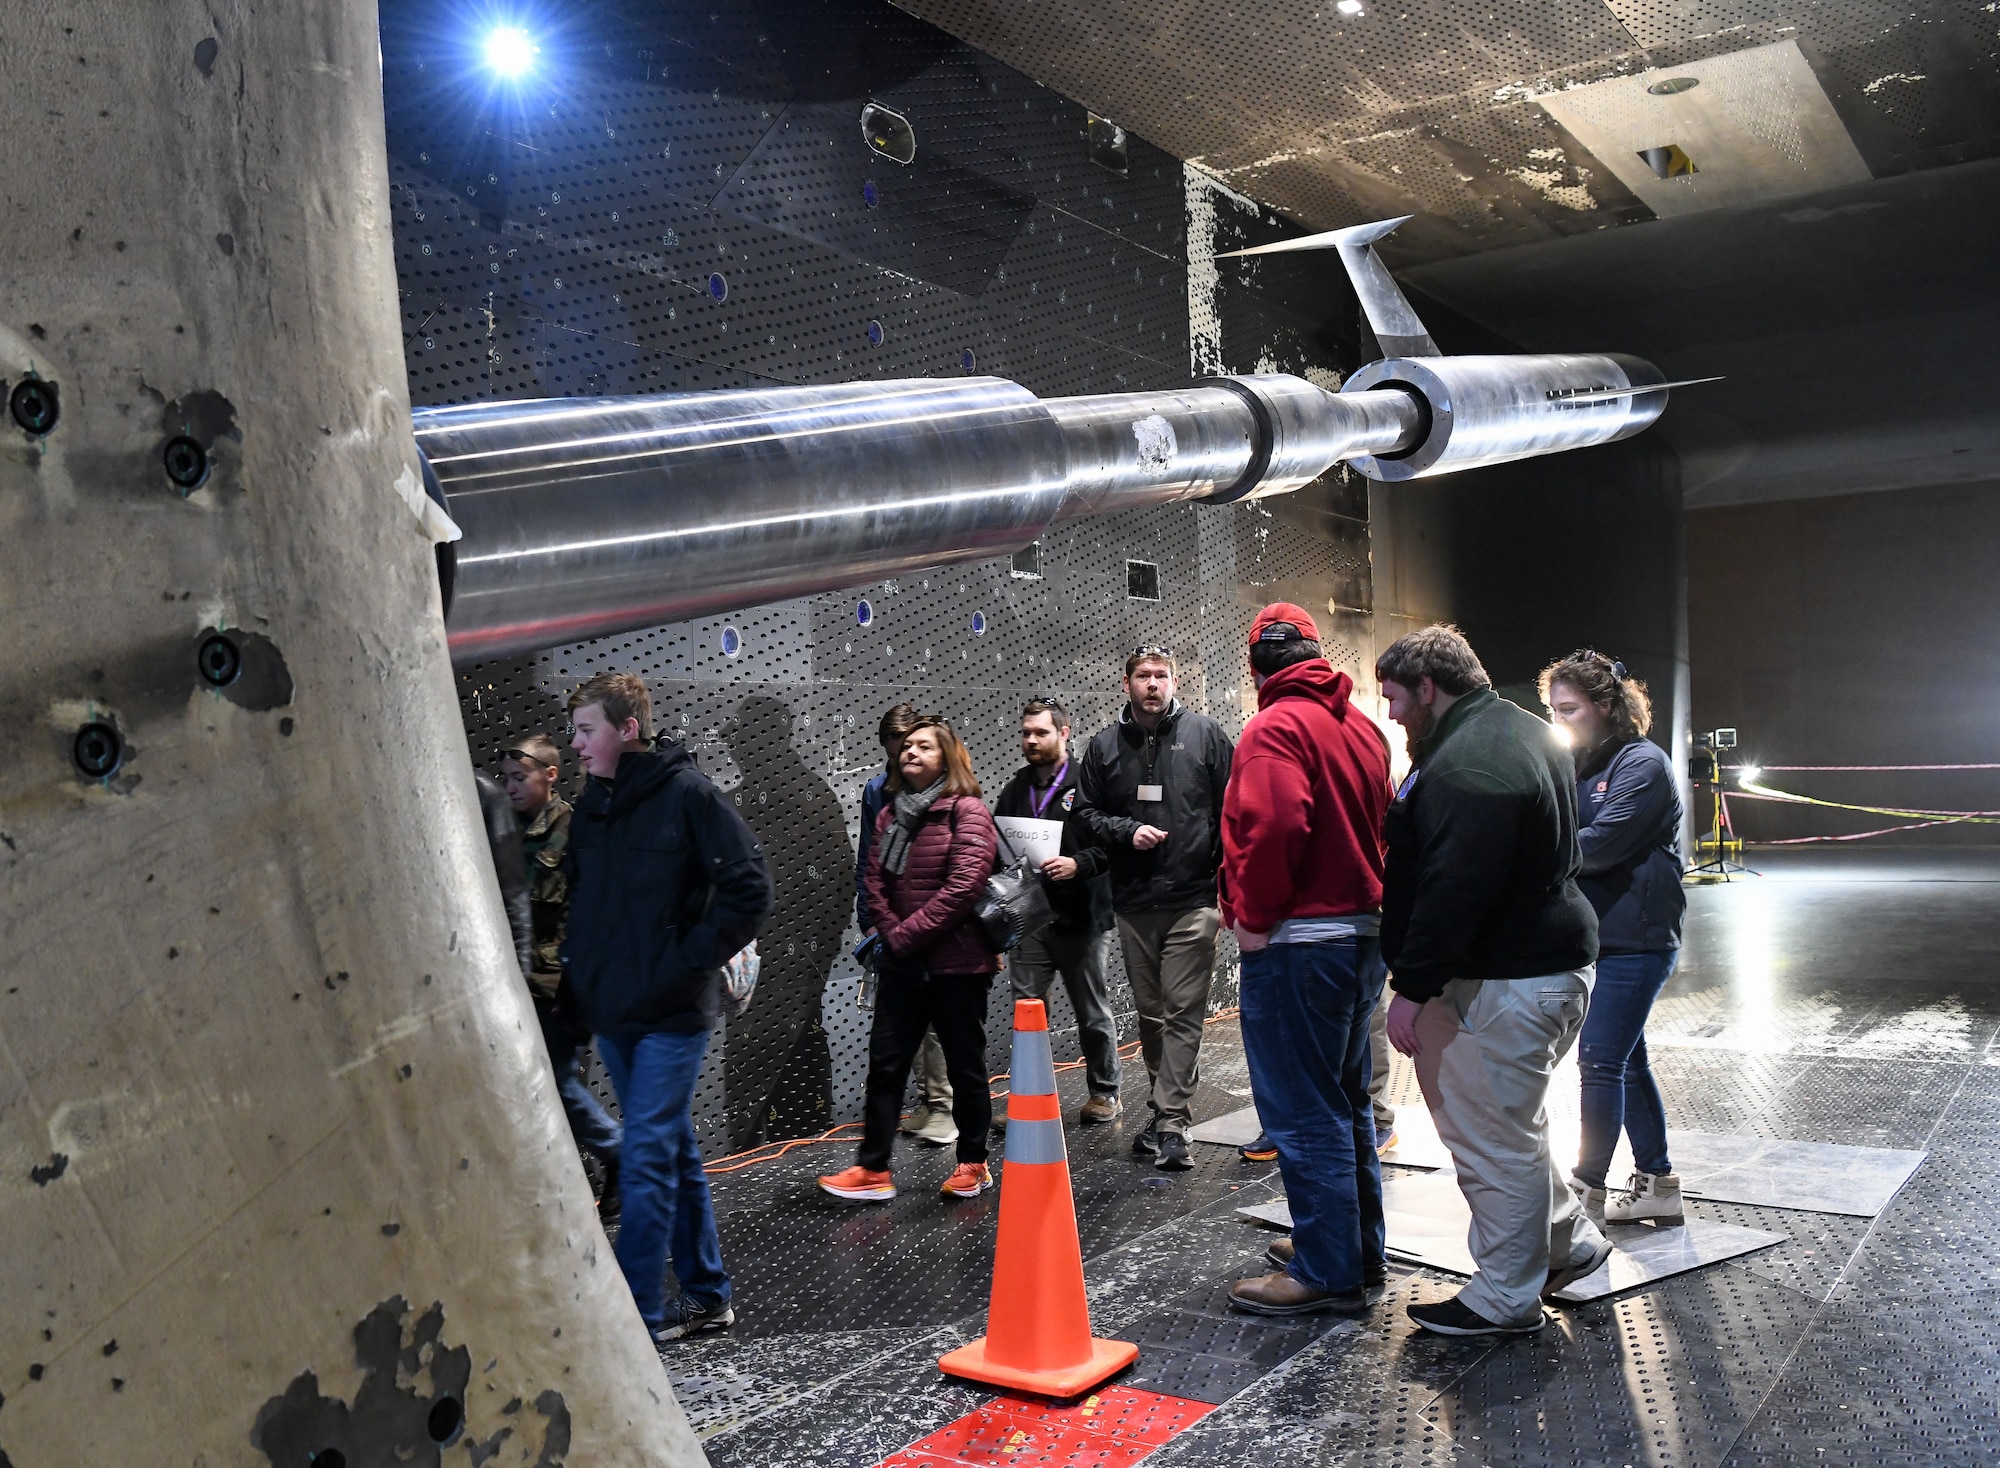 Group of people walking underneath a test model inside a wind tunnel